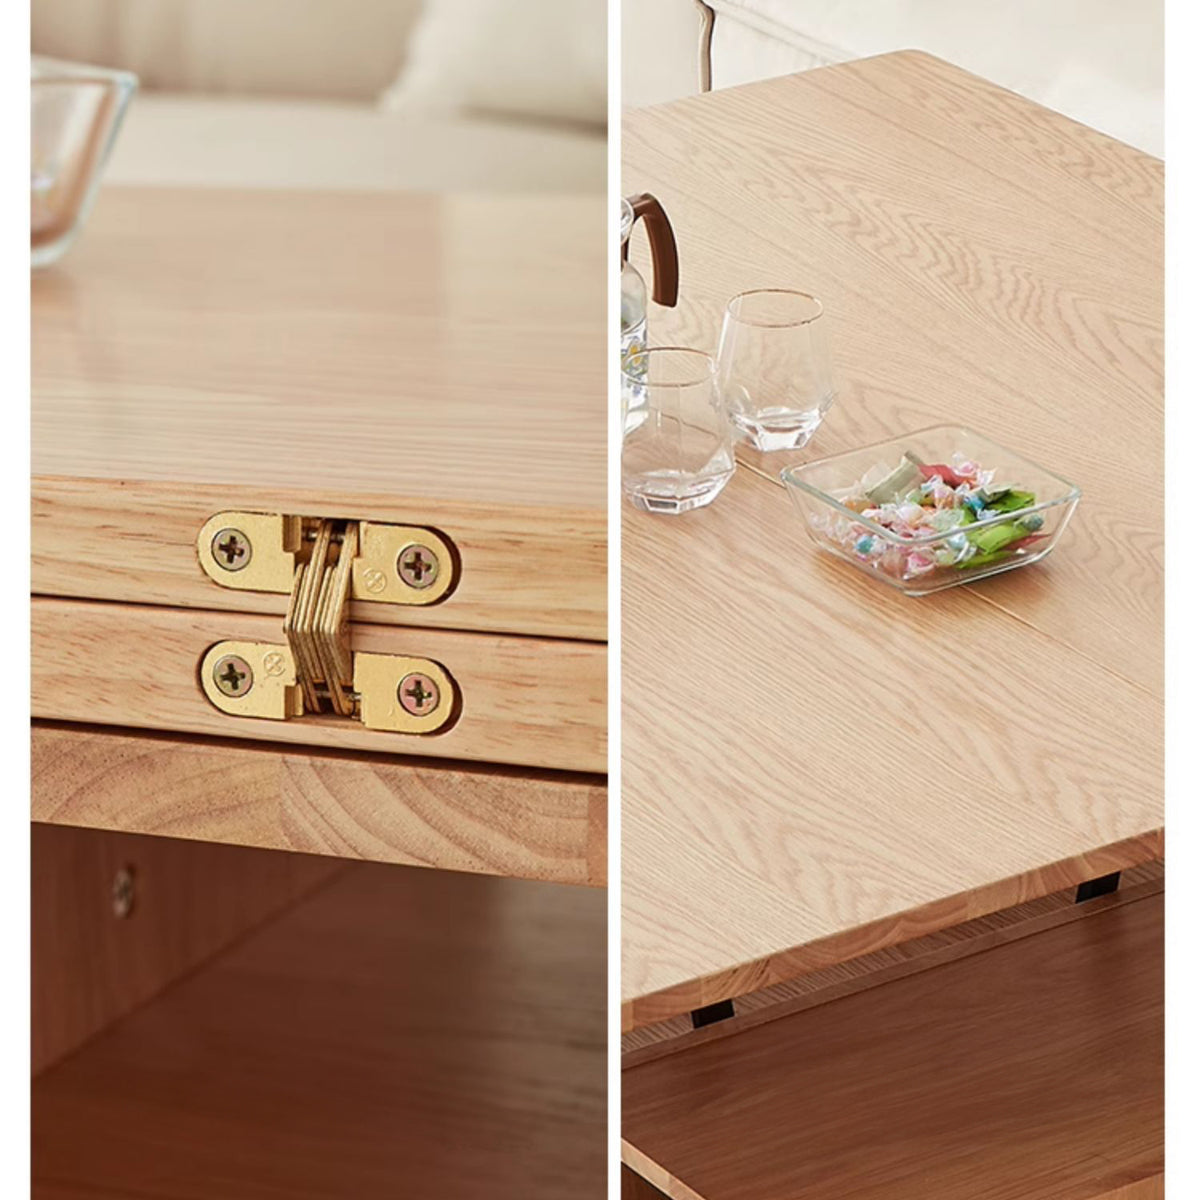 Elegant White Oak Solid Wood Tea Table with Ceramic Top - Natural Finish hx-1568